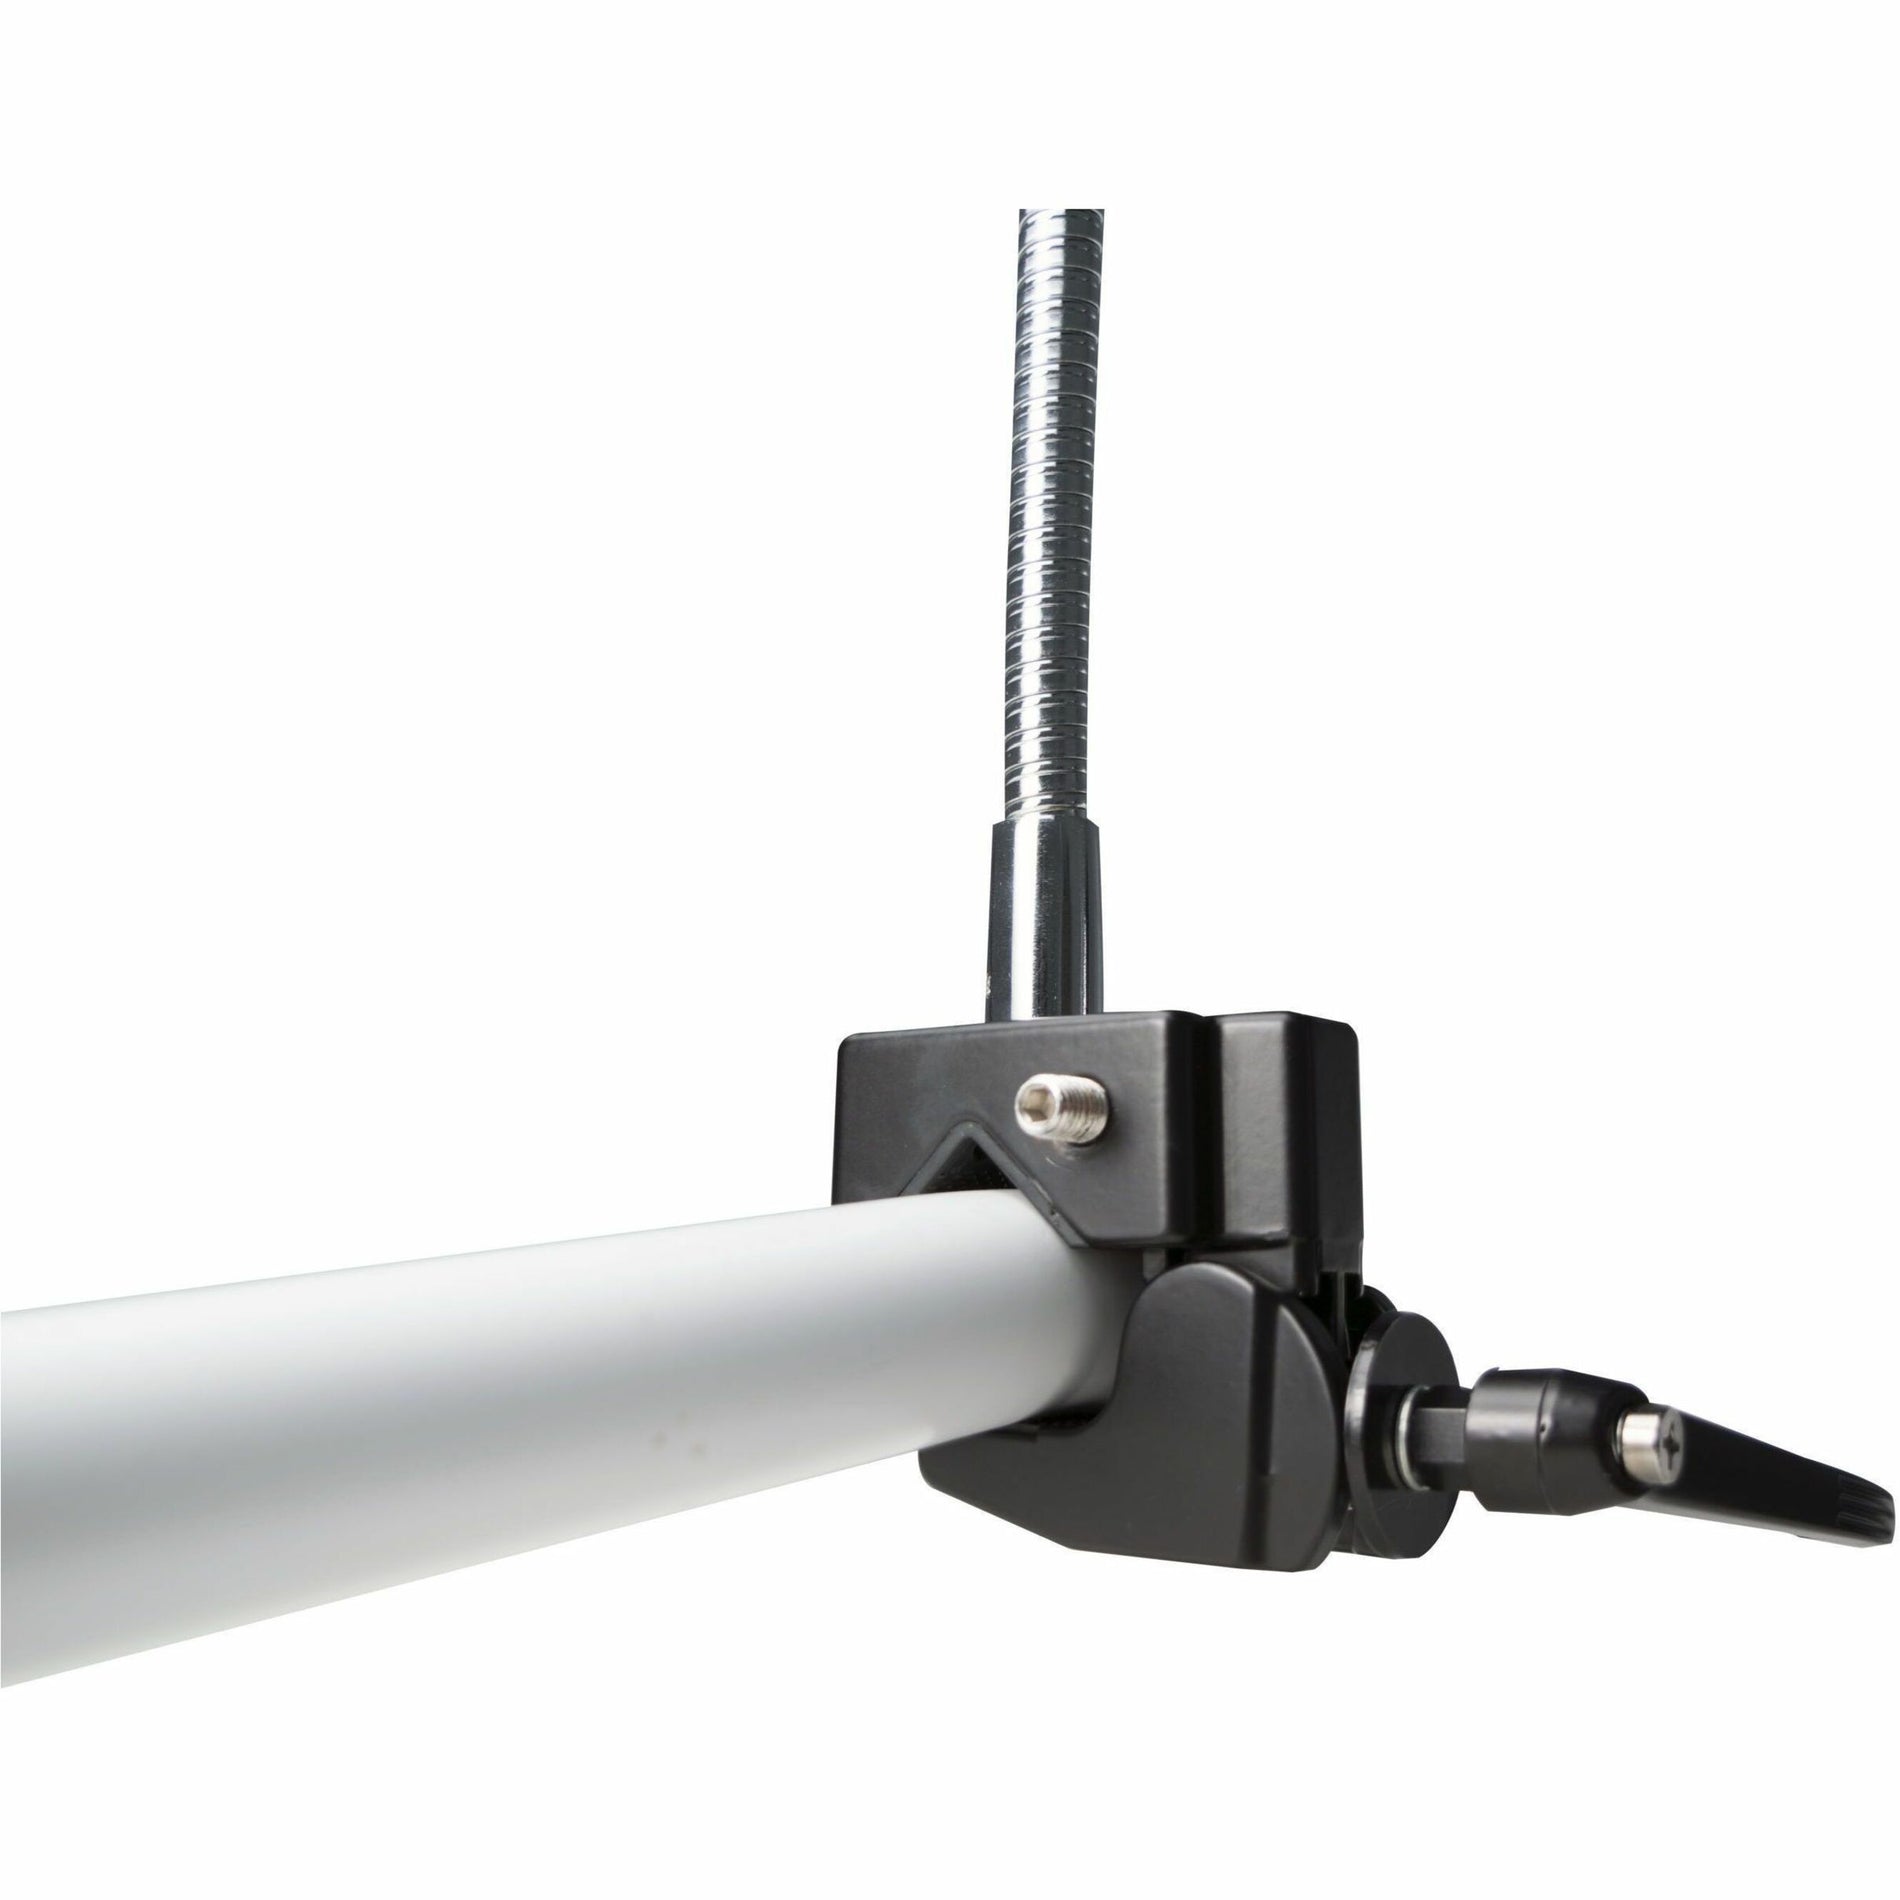 CTA Digital PAD-HGT Heavy-Duty Gooseneck Clamp Stand for 7-13 Inch Tablets, Tilt, Adjustable, Anti-slip, 360° Rotation